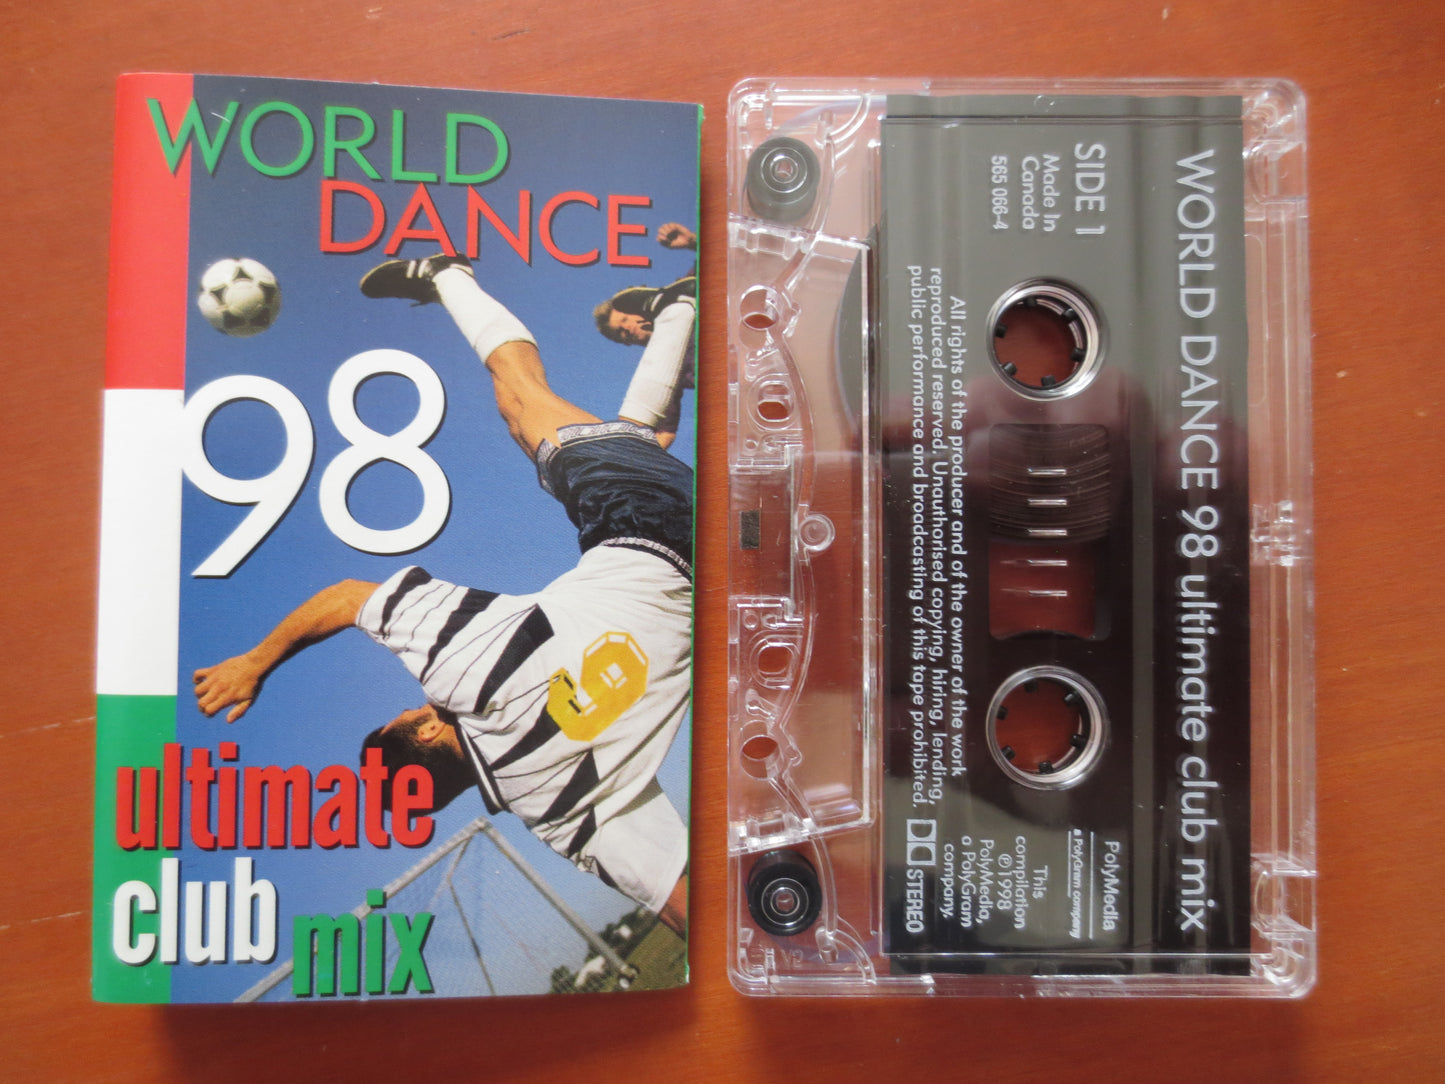 WORLD DANCE 98, ULTIMATE Club Mix, Tape Cassette, Dance Cassette, Dance Music Tape, Pop Lp, Music Cassette, 1998 Cassette